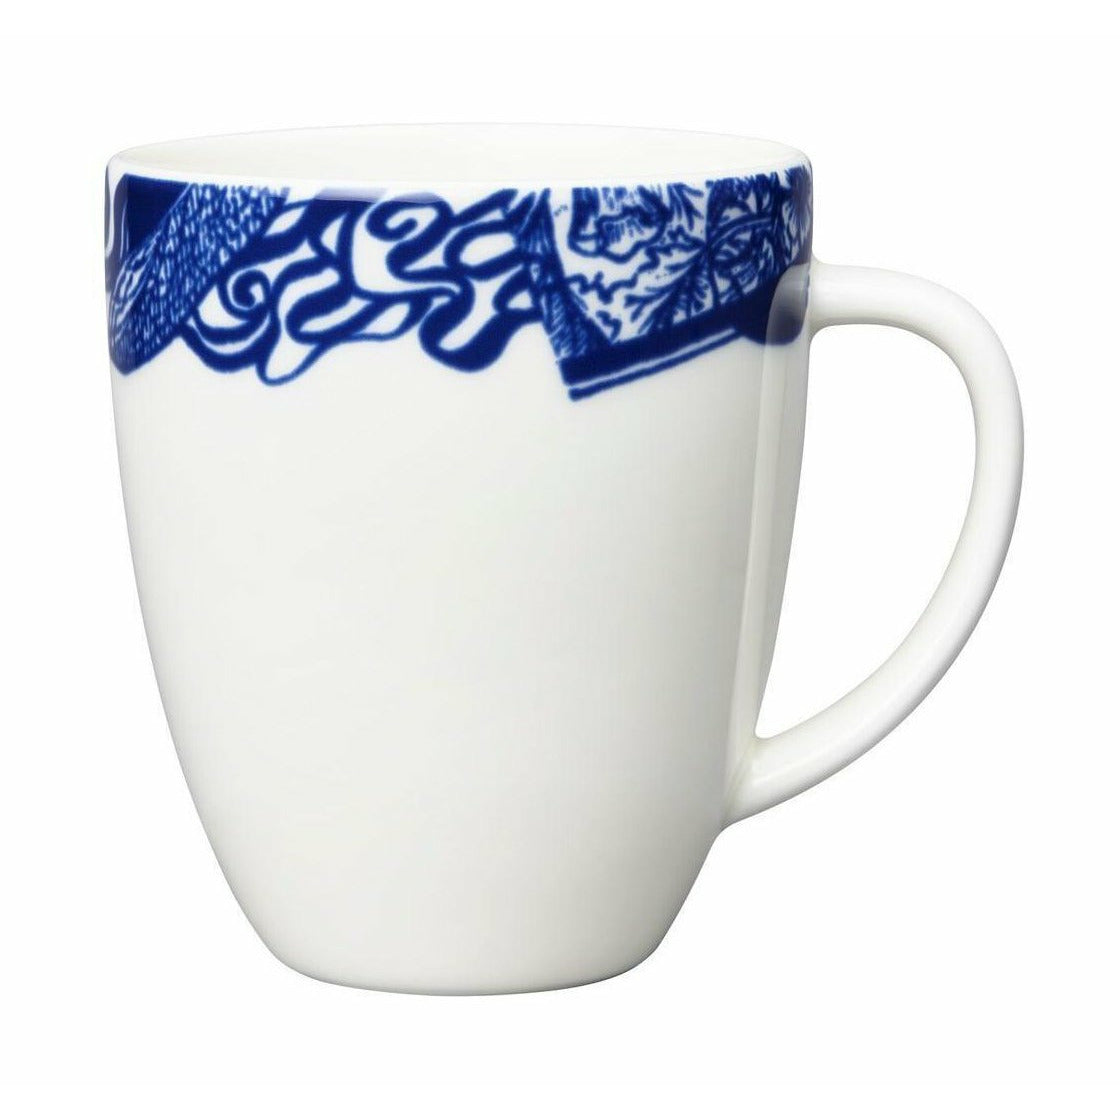 Arabia Pastoraali vas 13 cm, vit/blå